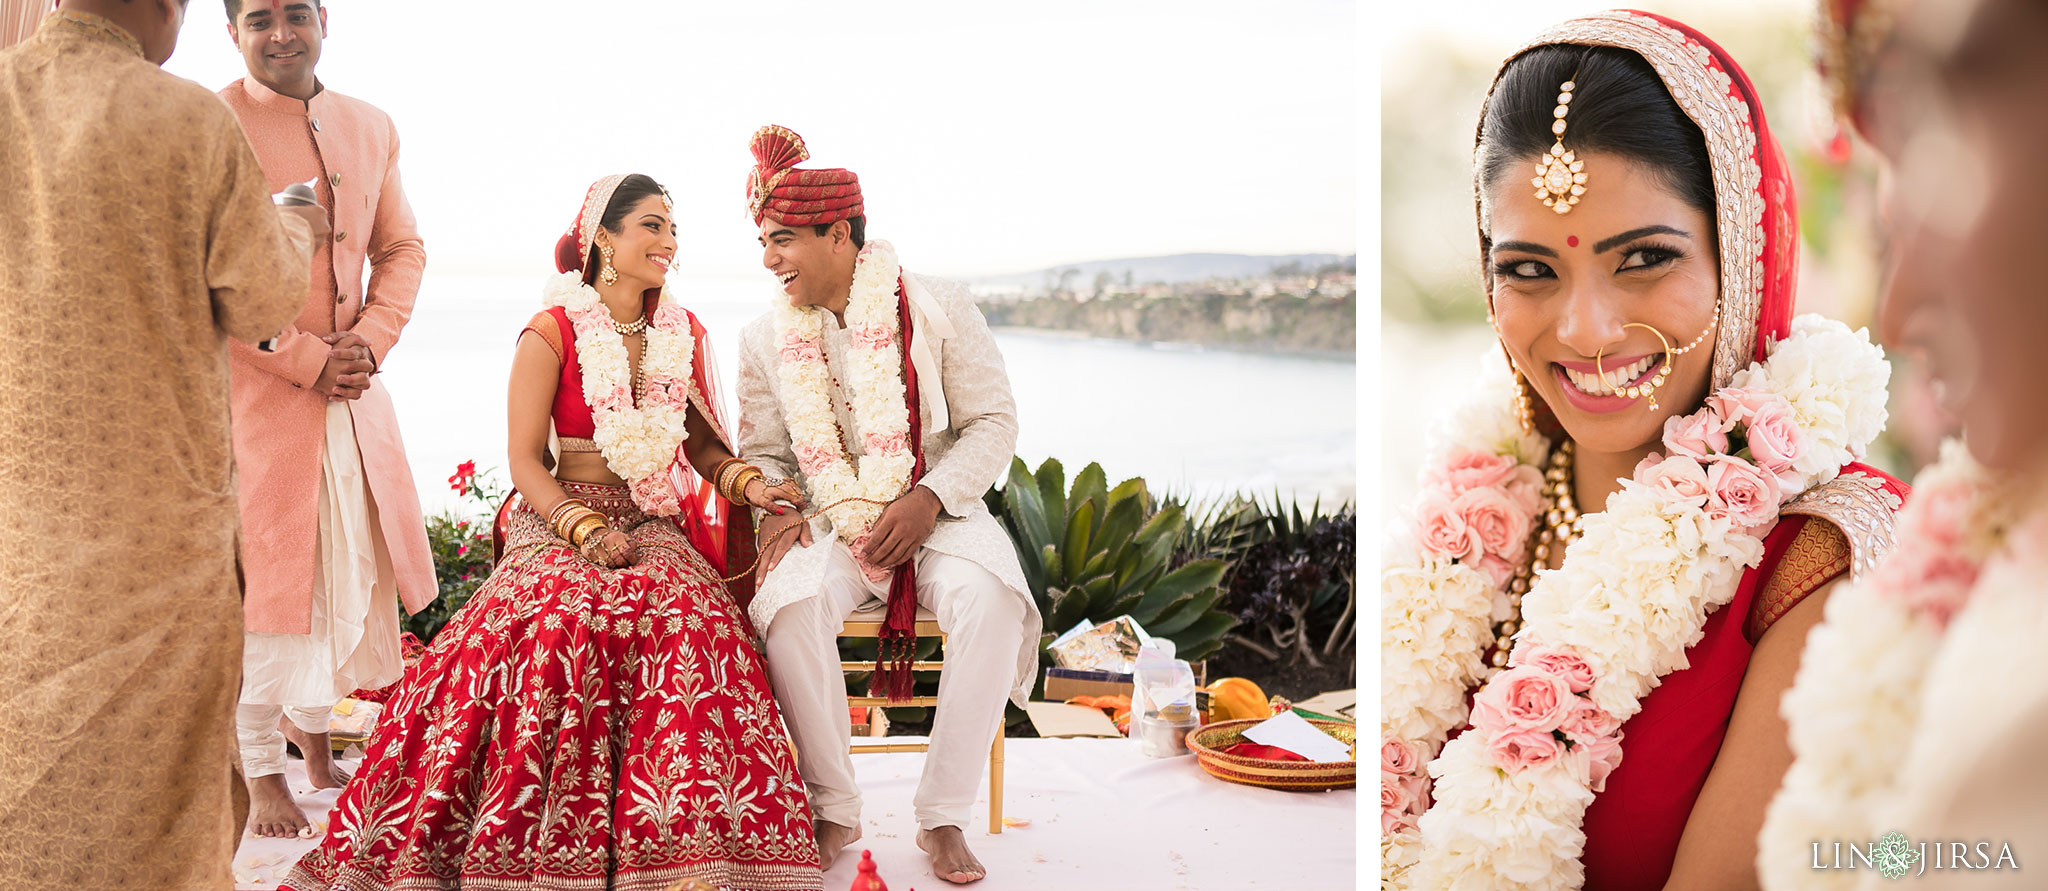 27 ritz carlton laguna niguel indian wedding ceremony photography